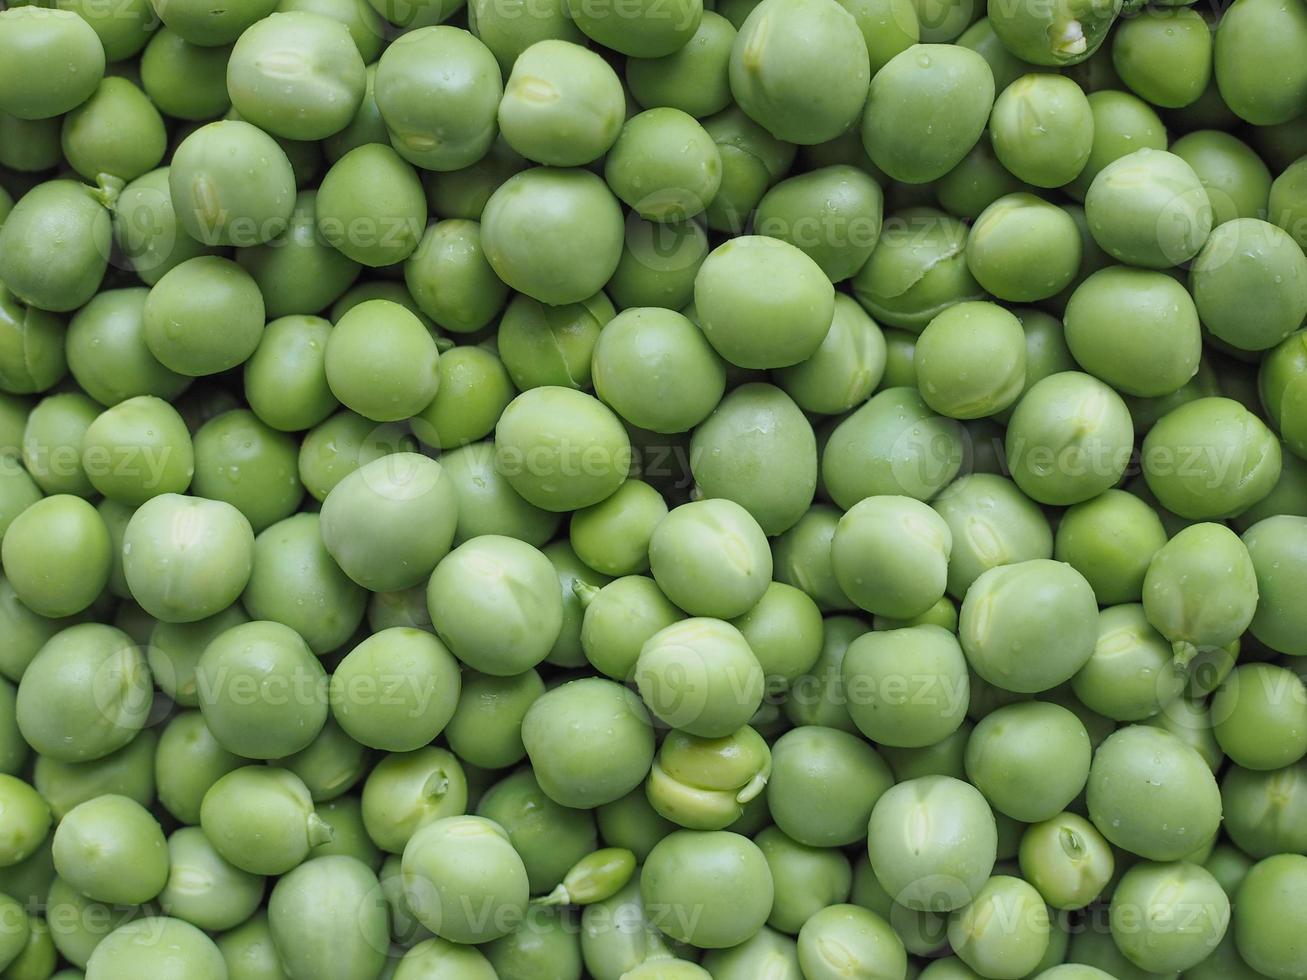 sfondo vegetale di piselli verdi foto